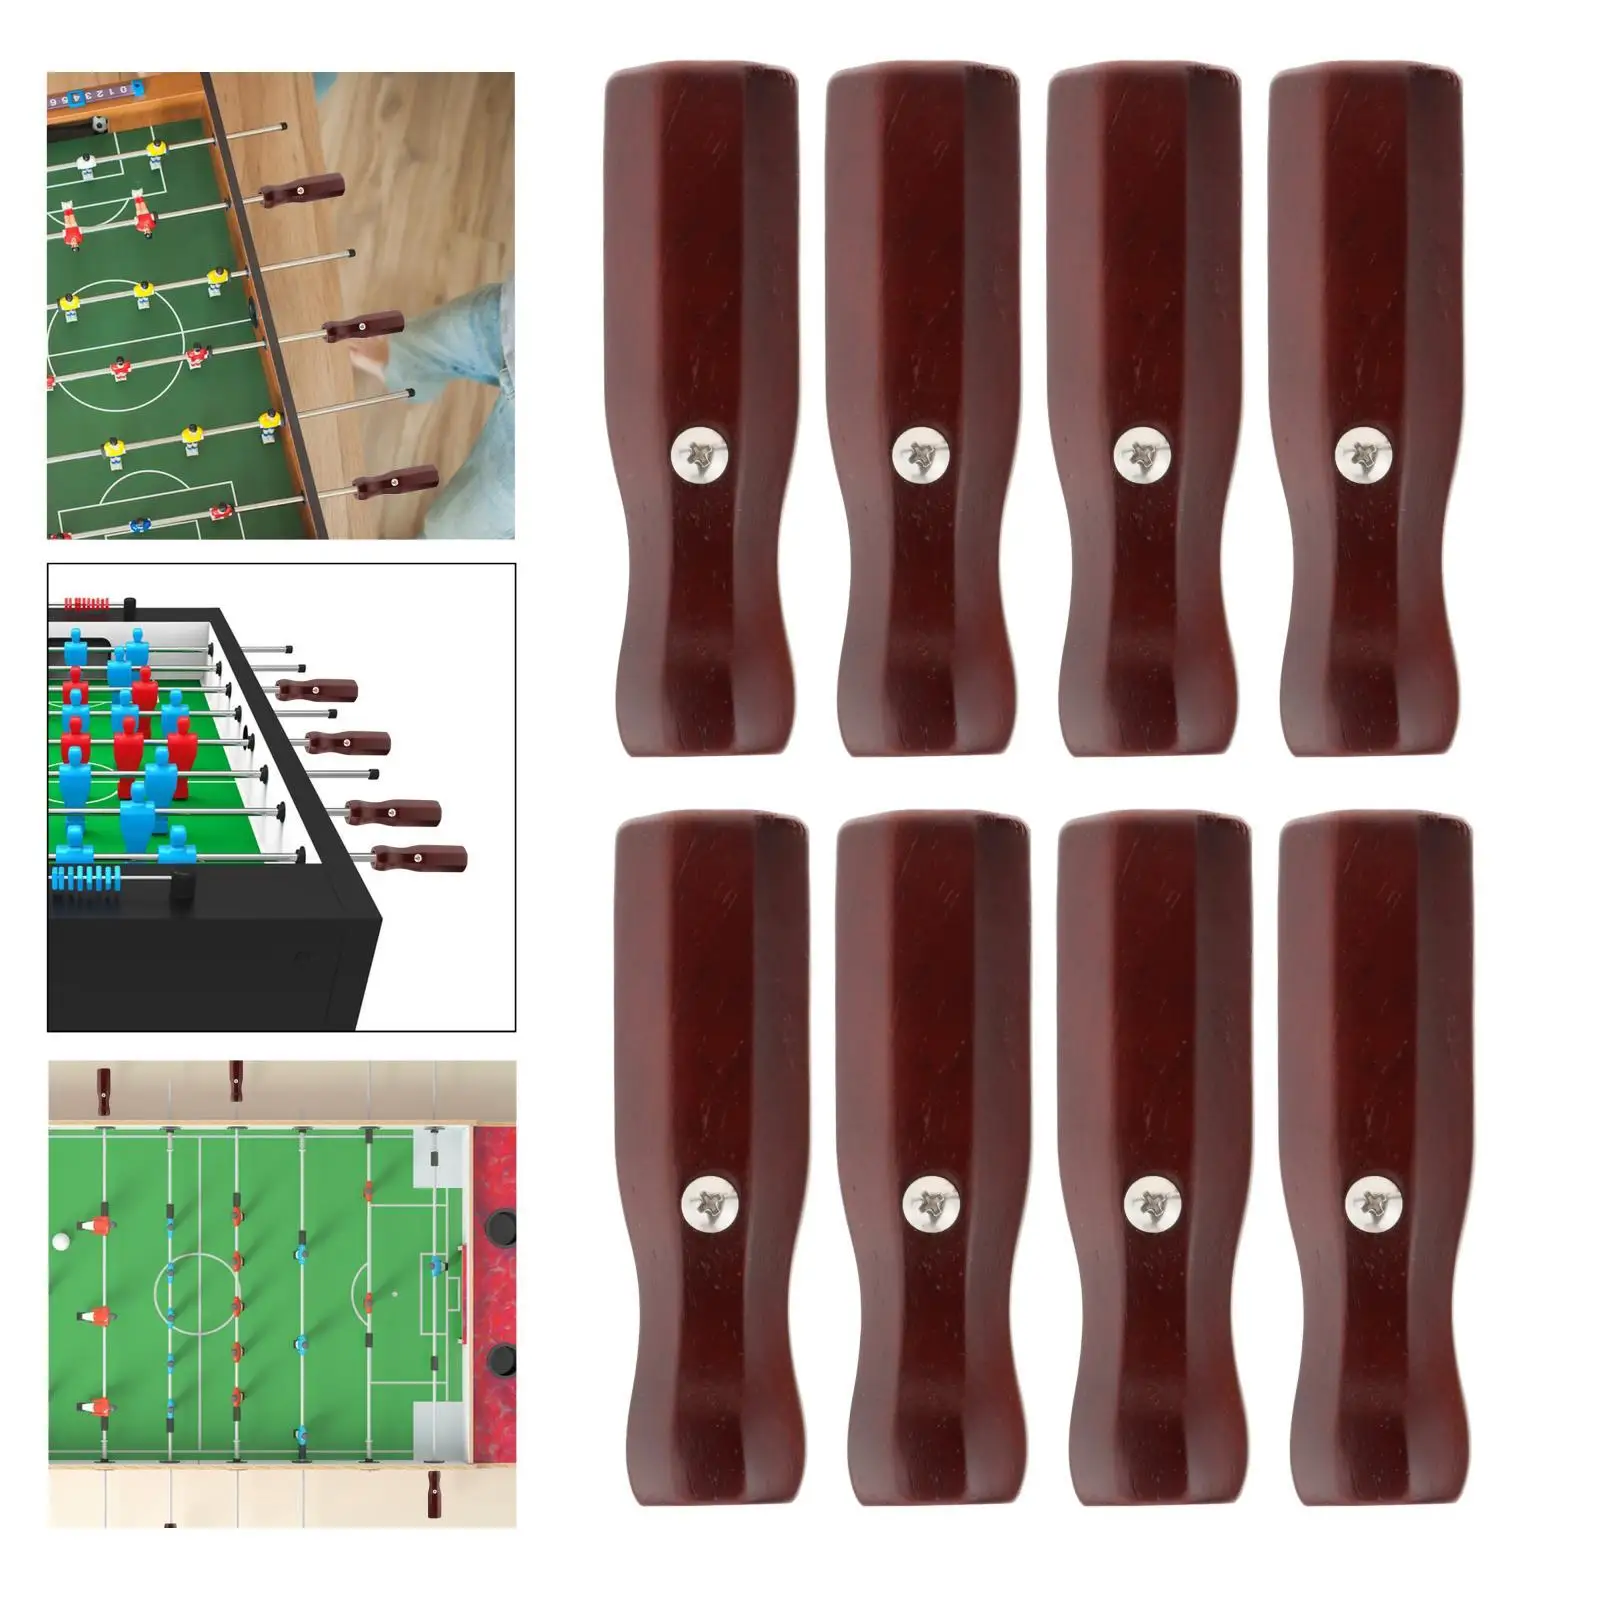 8Pcs Soccer Table Handles Nonslip Grip 16mm Hole Foosball Table Rod End Caps